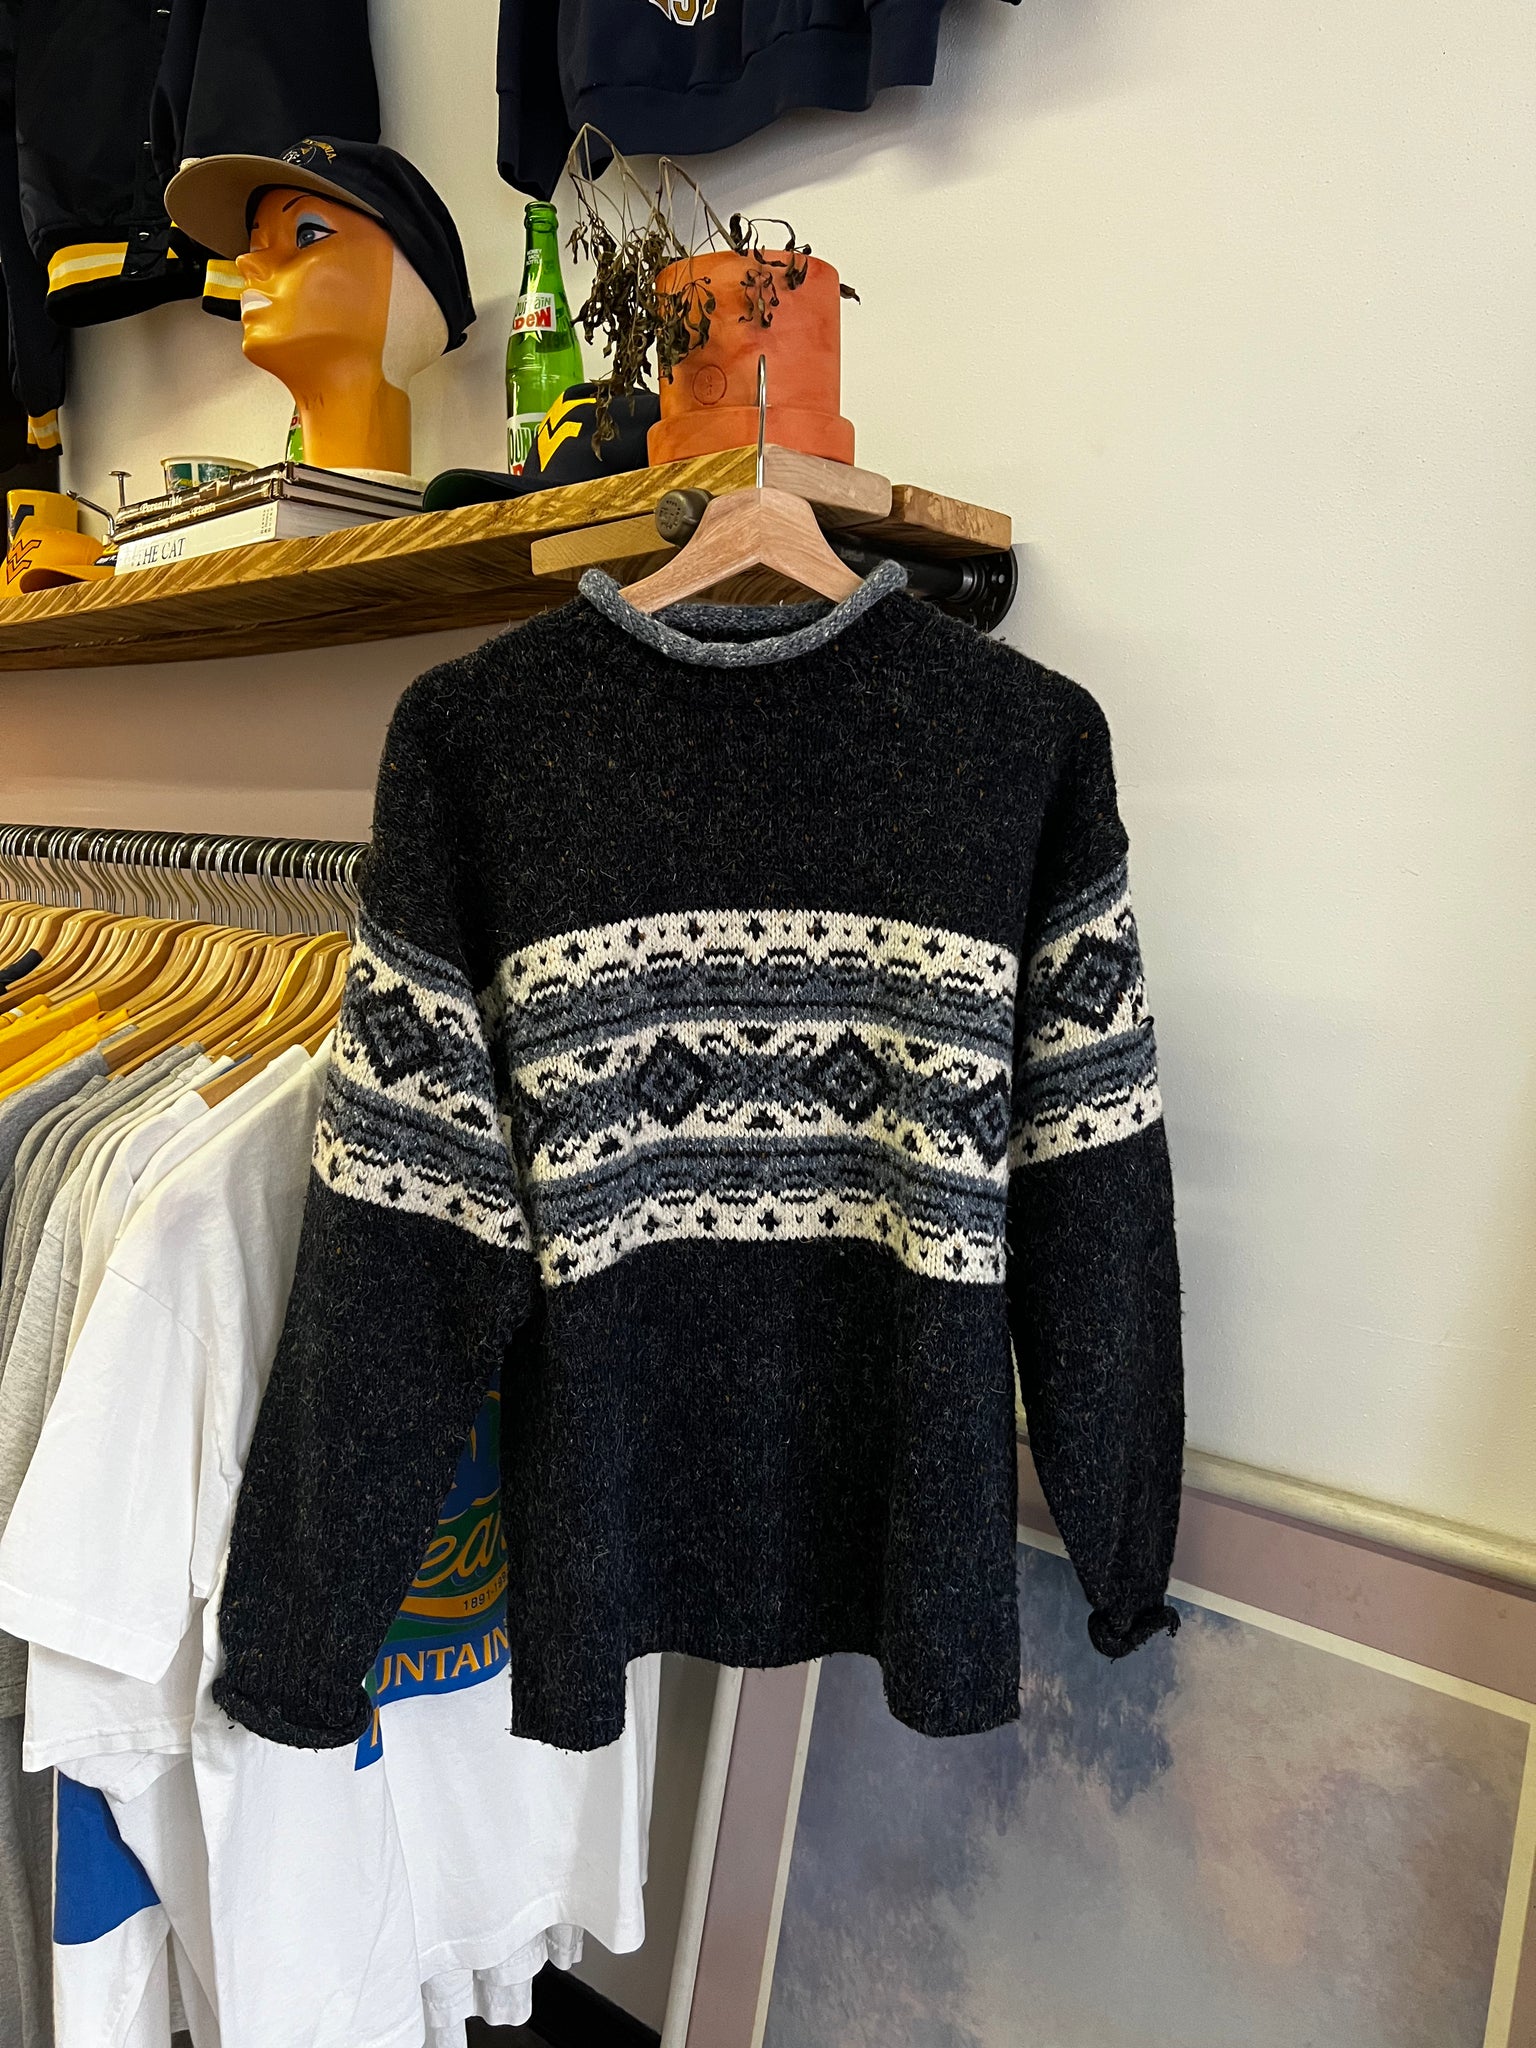 Vintage 90s/Y2K Patterned Sweater